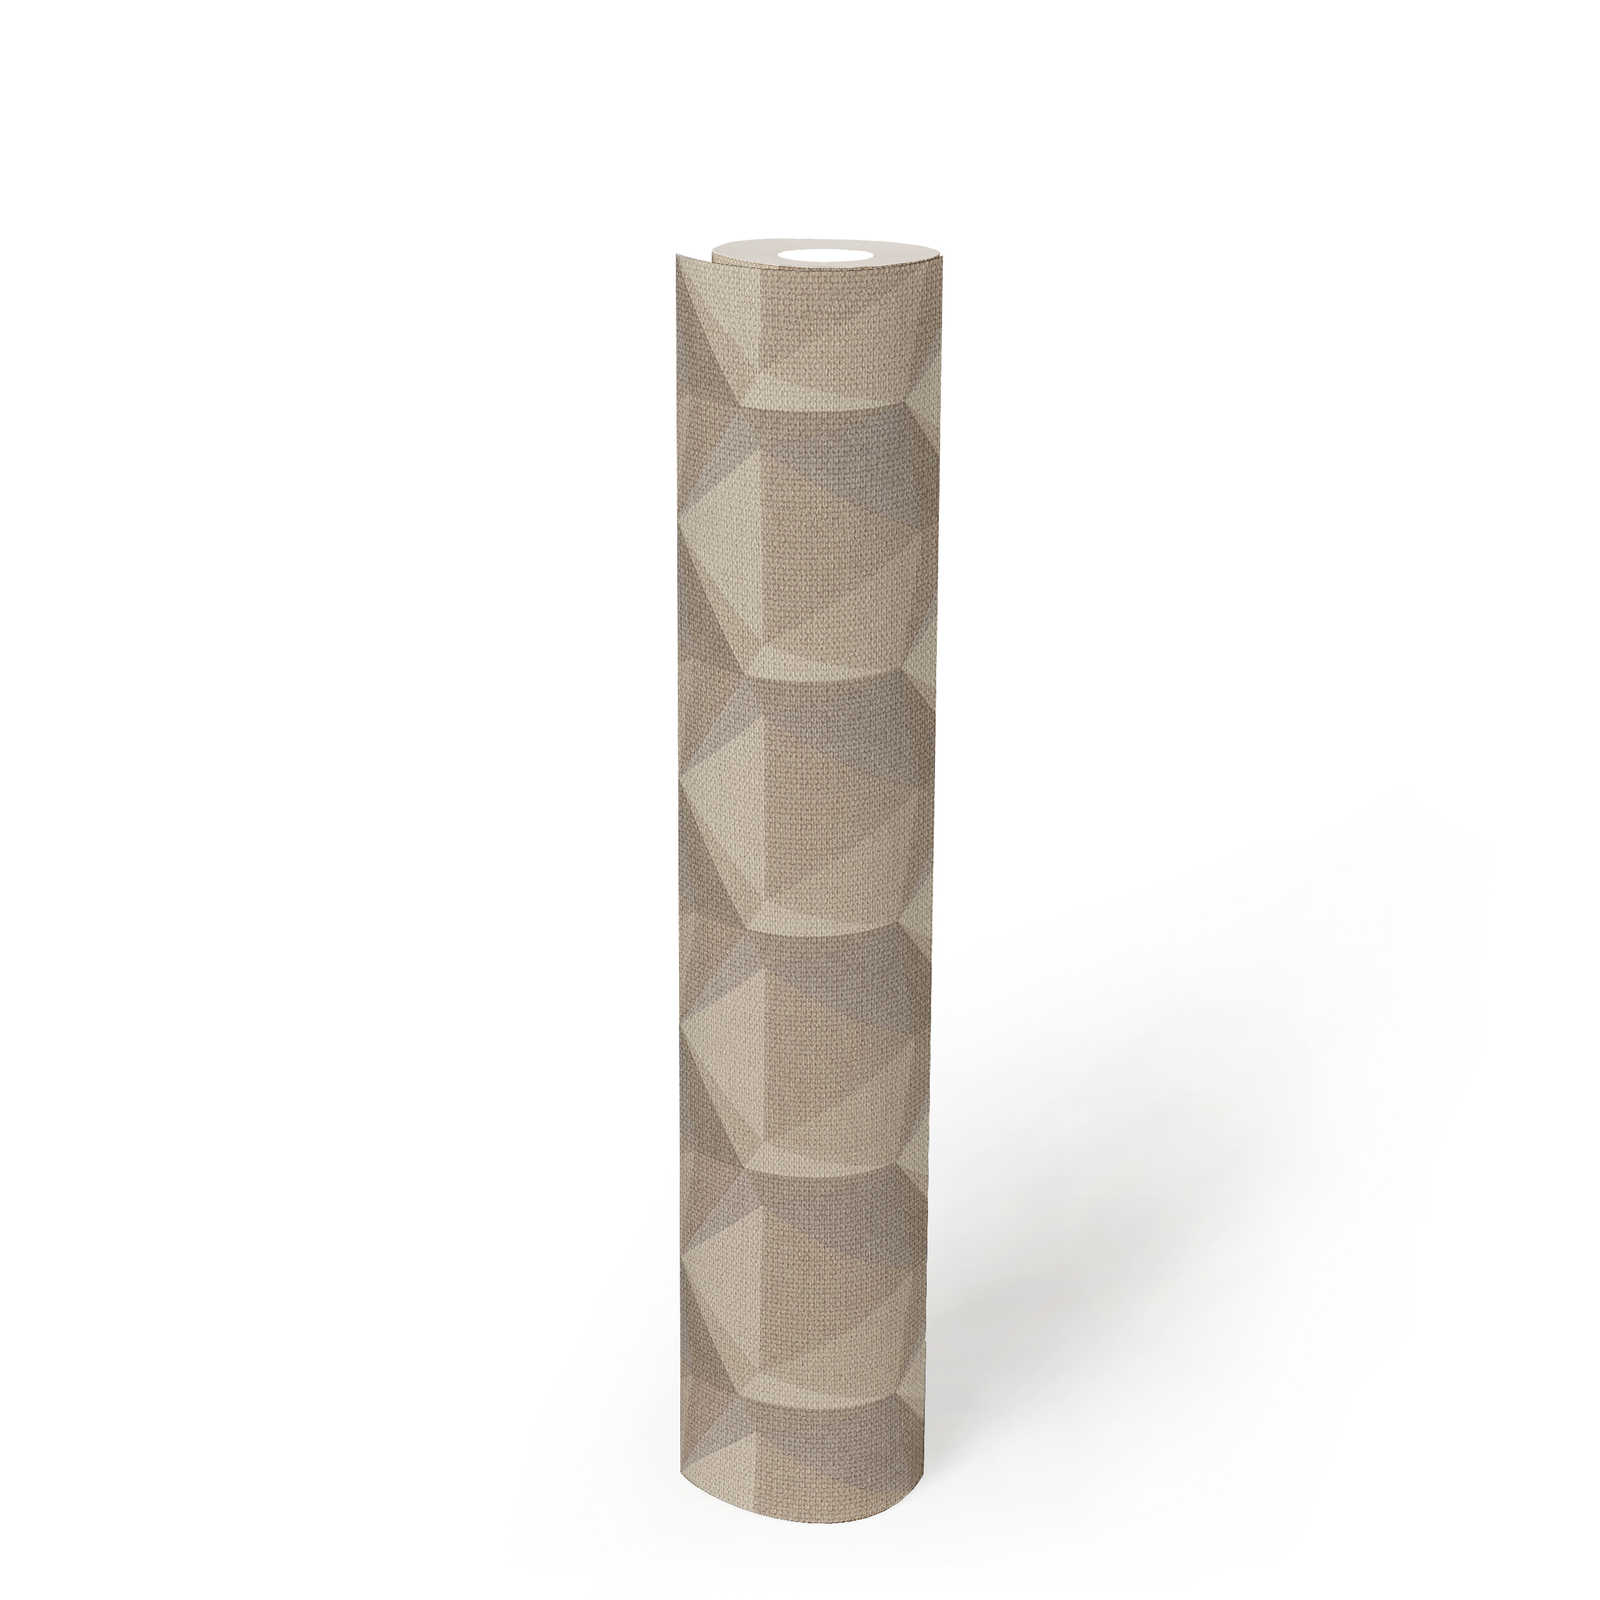             Mustertapete mit 3D Design & Leinenoptik – Beige, Grau
        